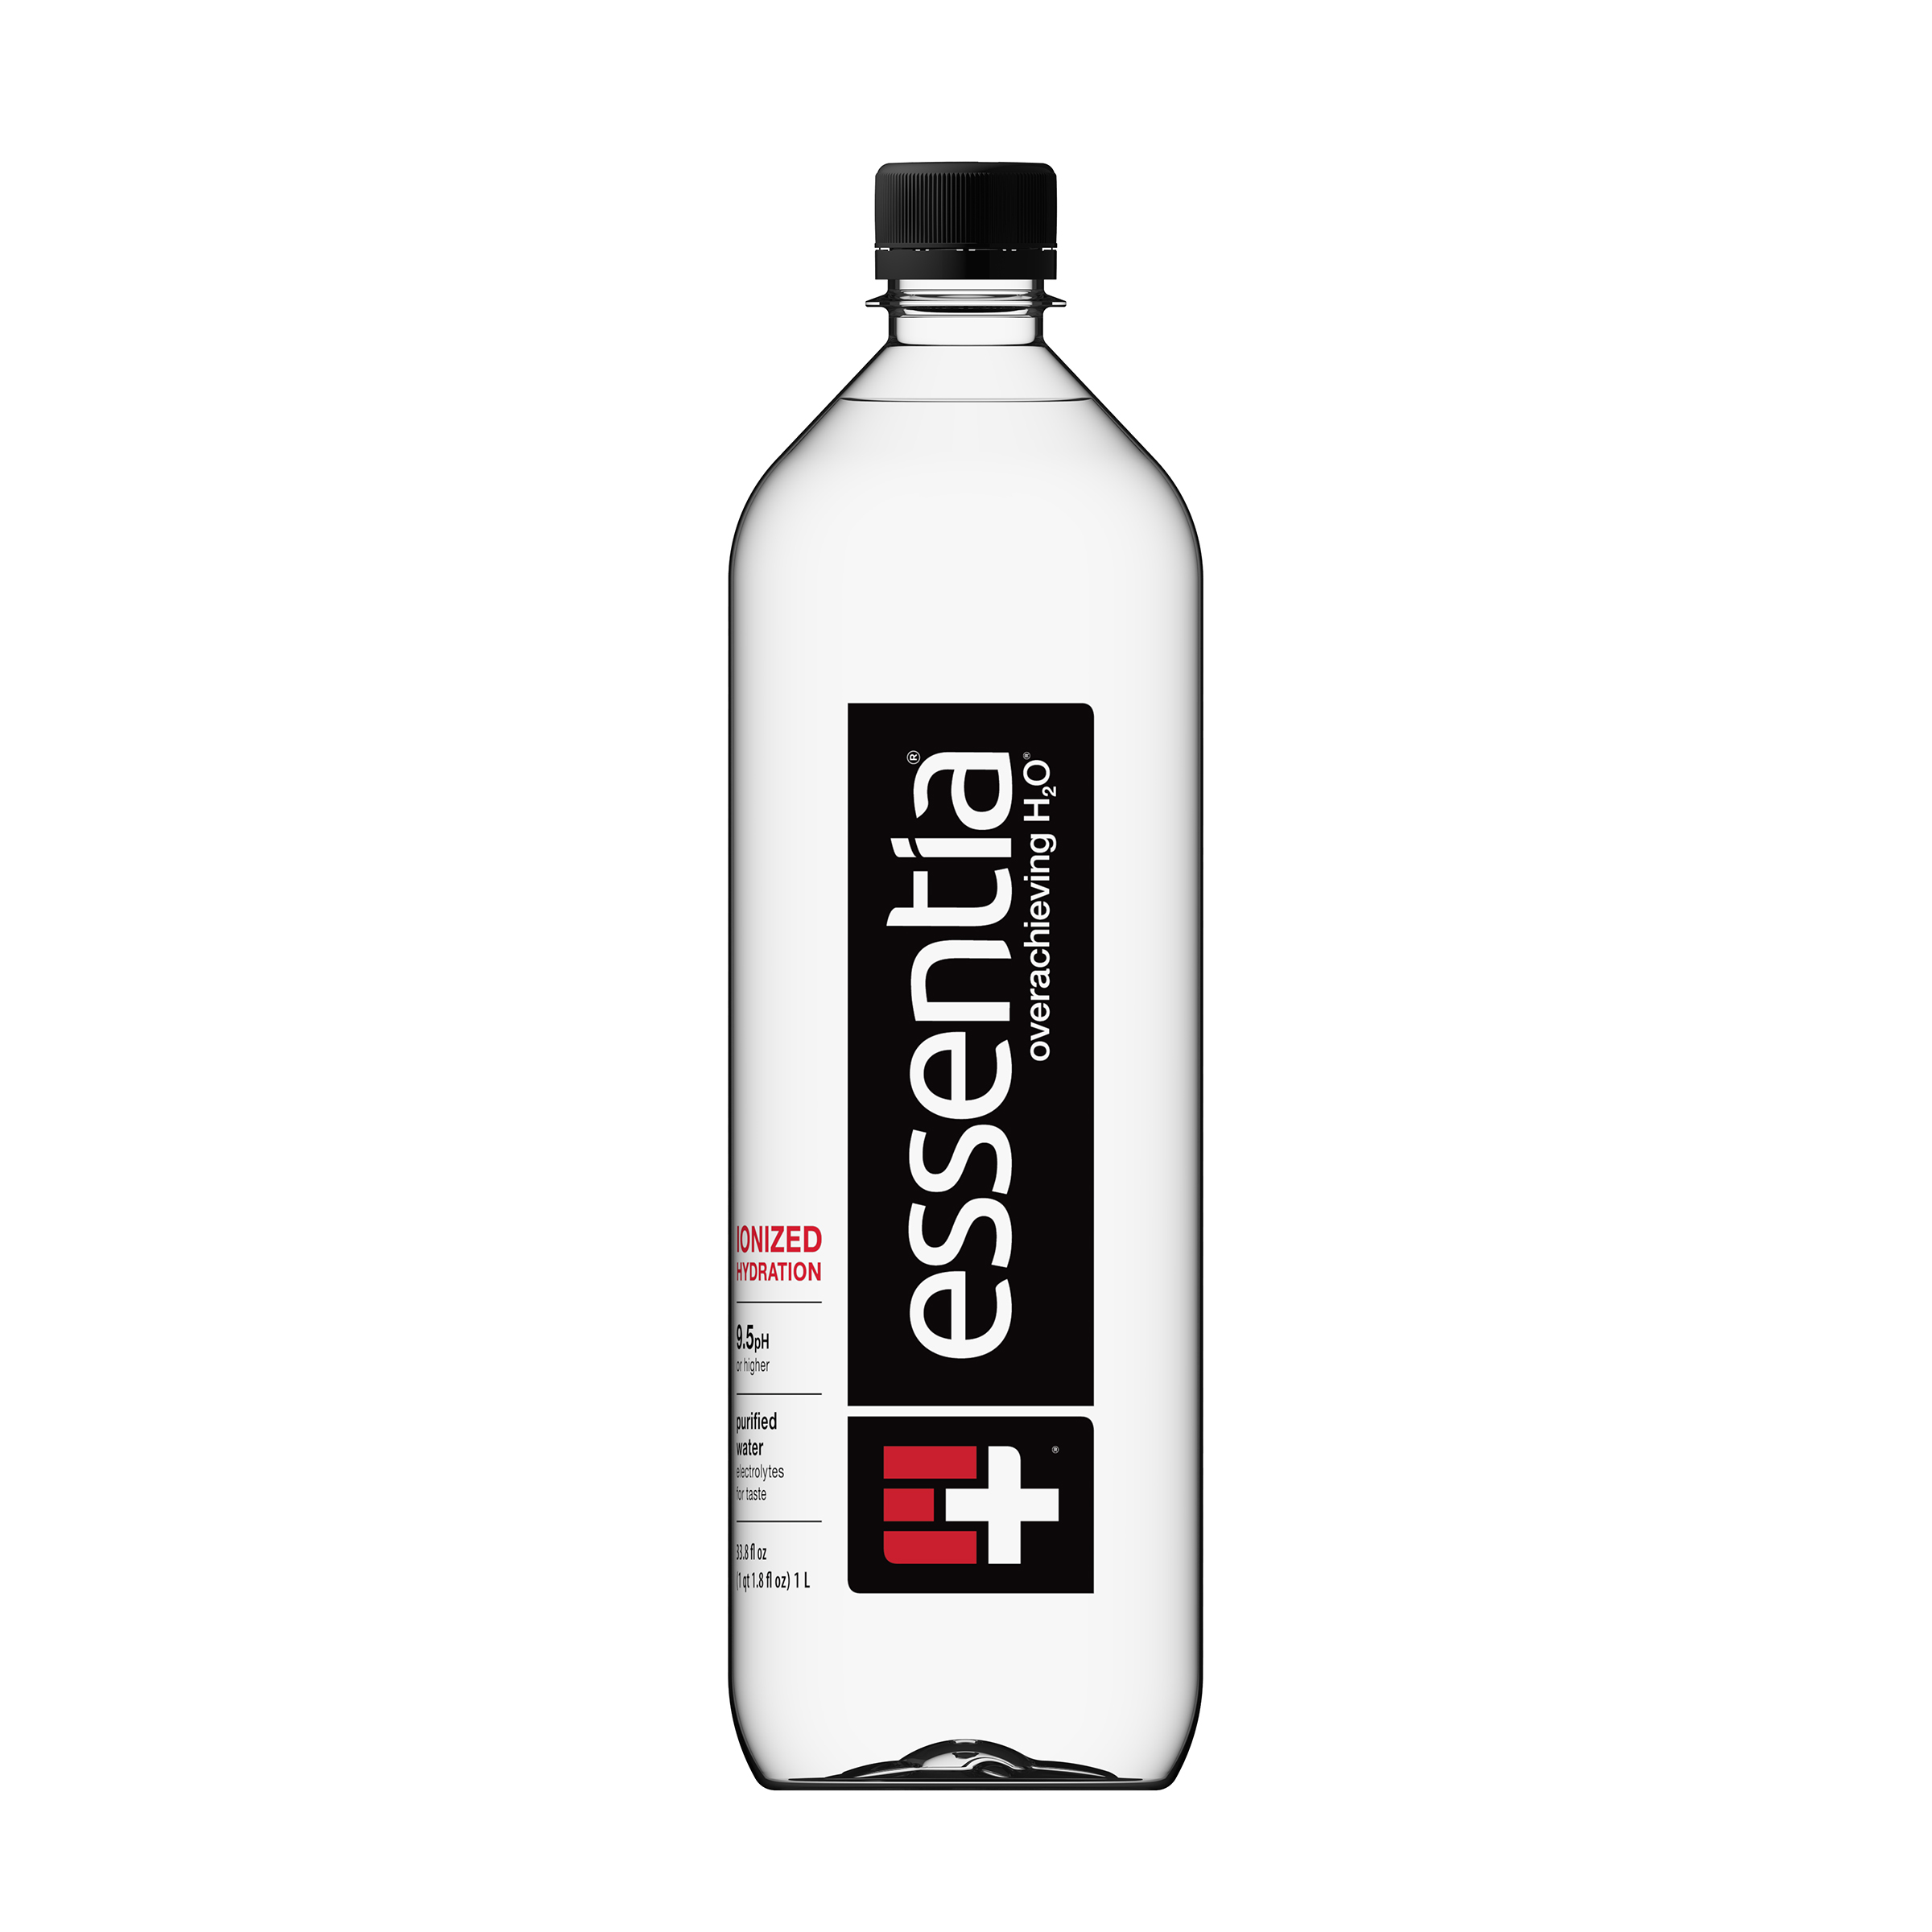 Essentia Water - 1 Liter Bottles 12 units per case 0.3 gal